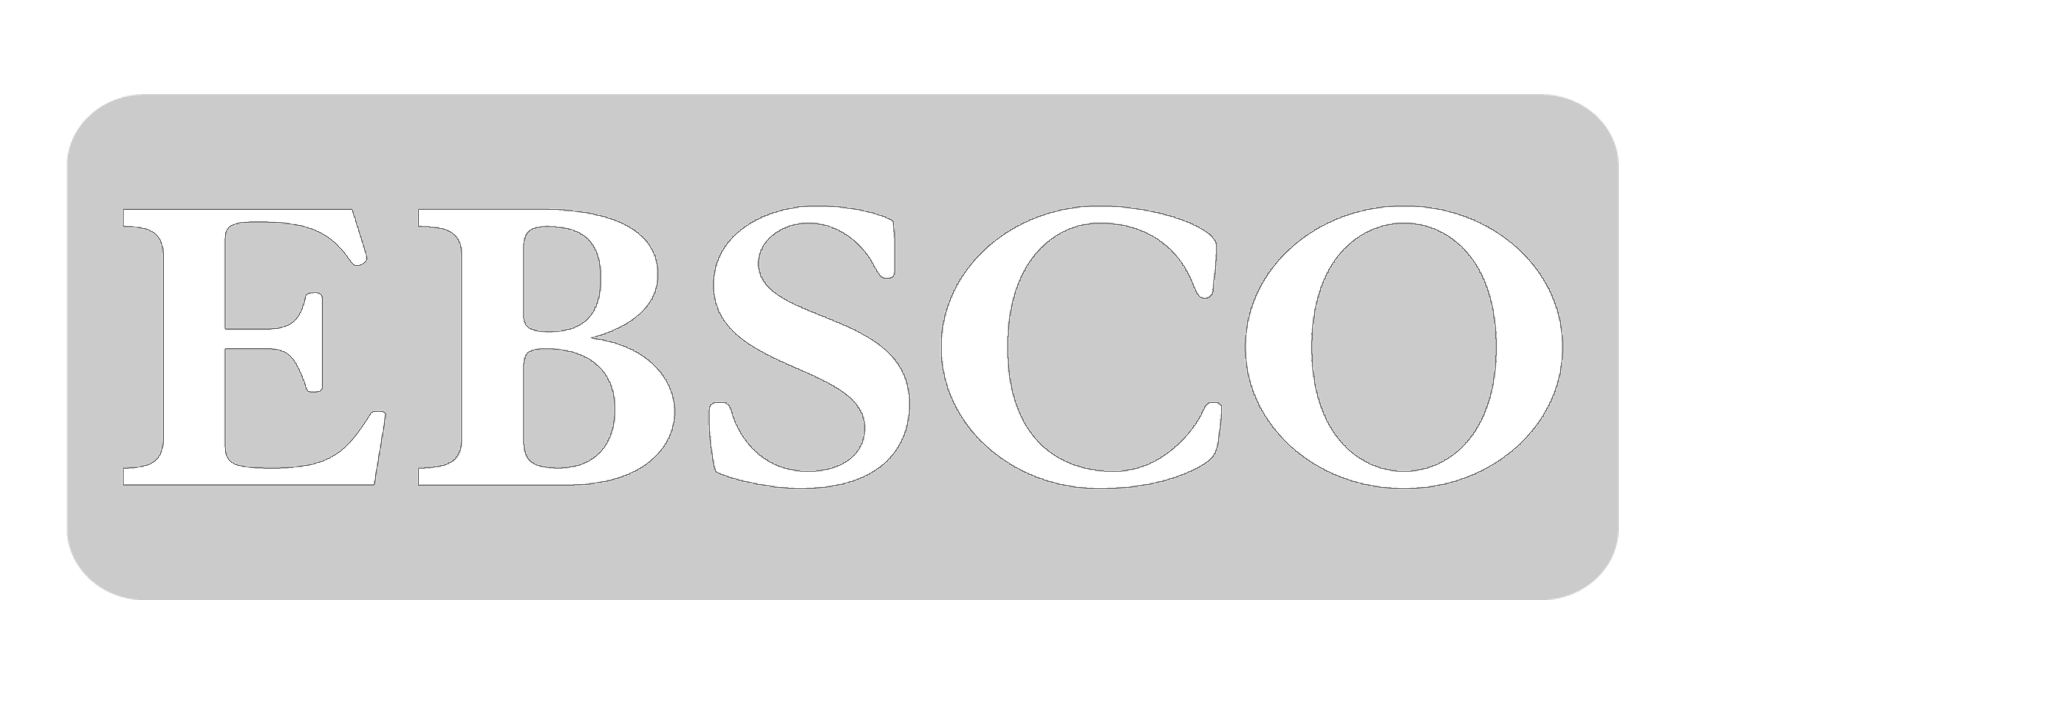 EBSCO - Host